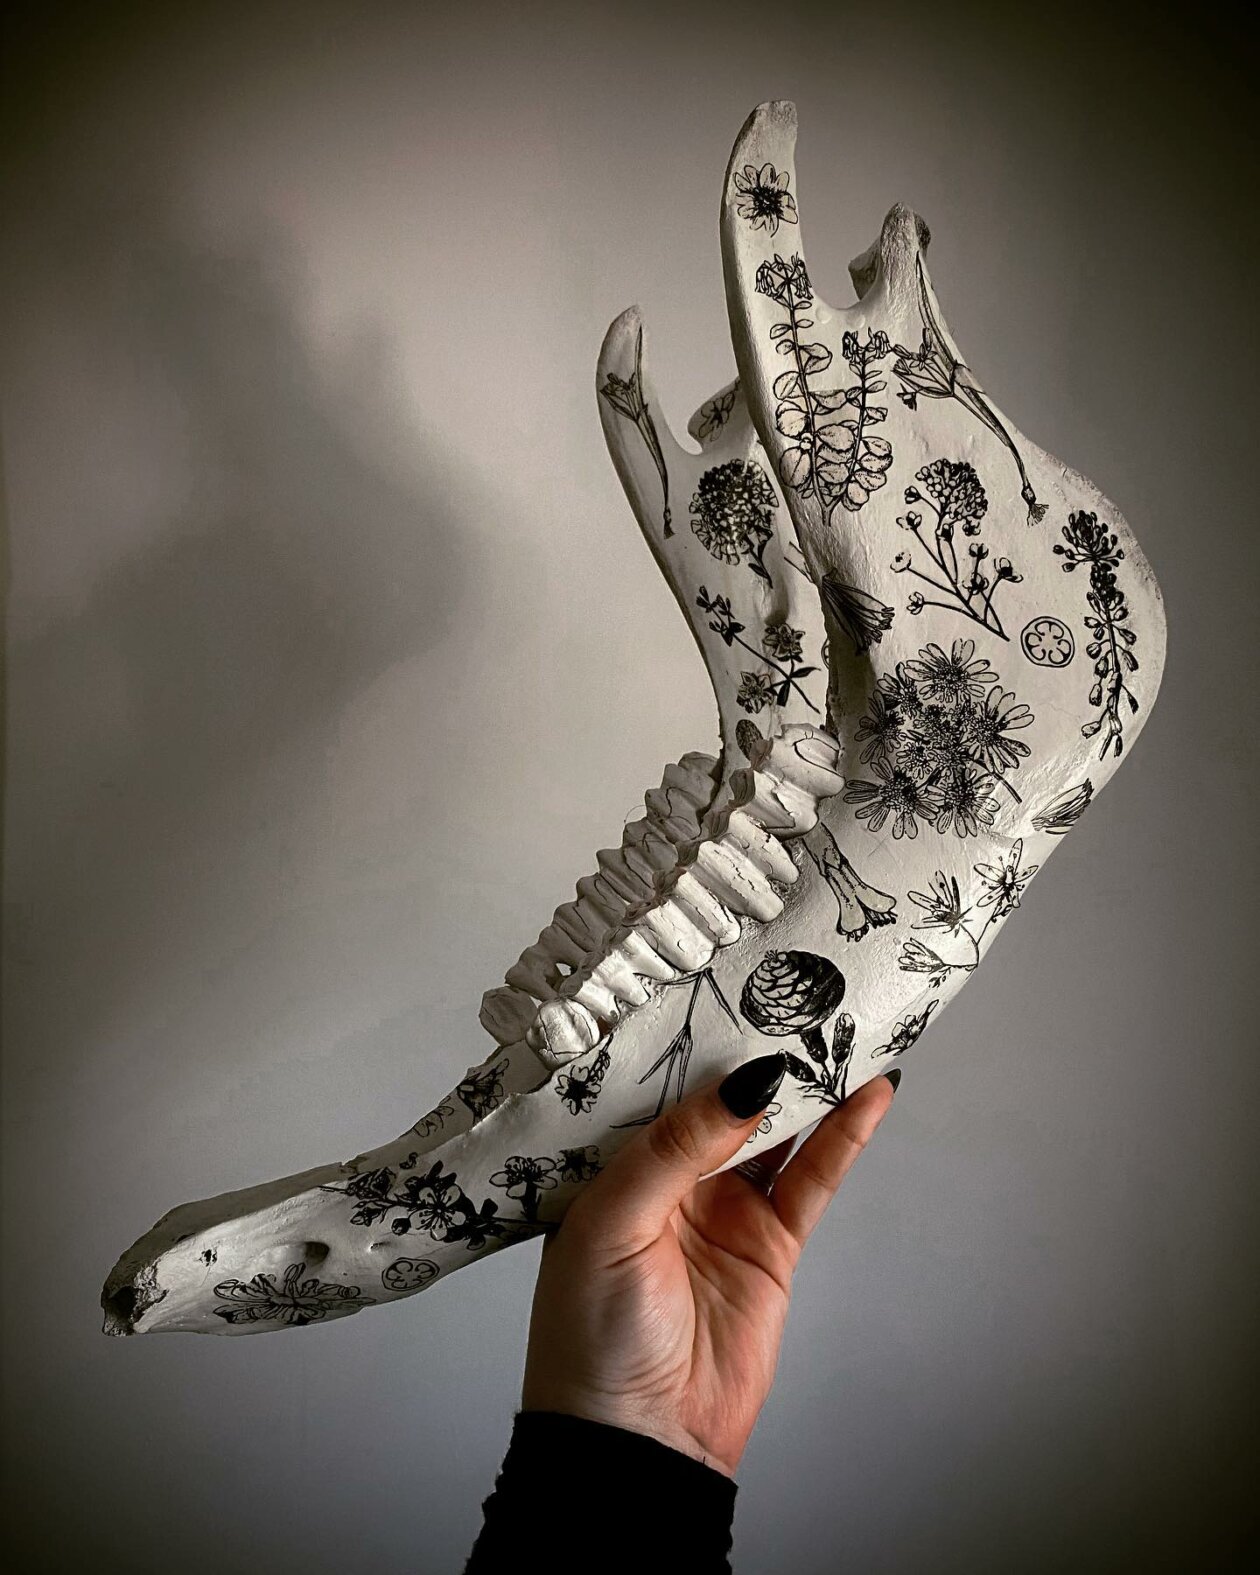 The Floral Decorated Bone And Skull Art Of Emmanuelle Jobidon (20)